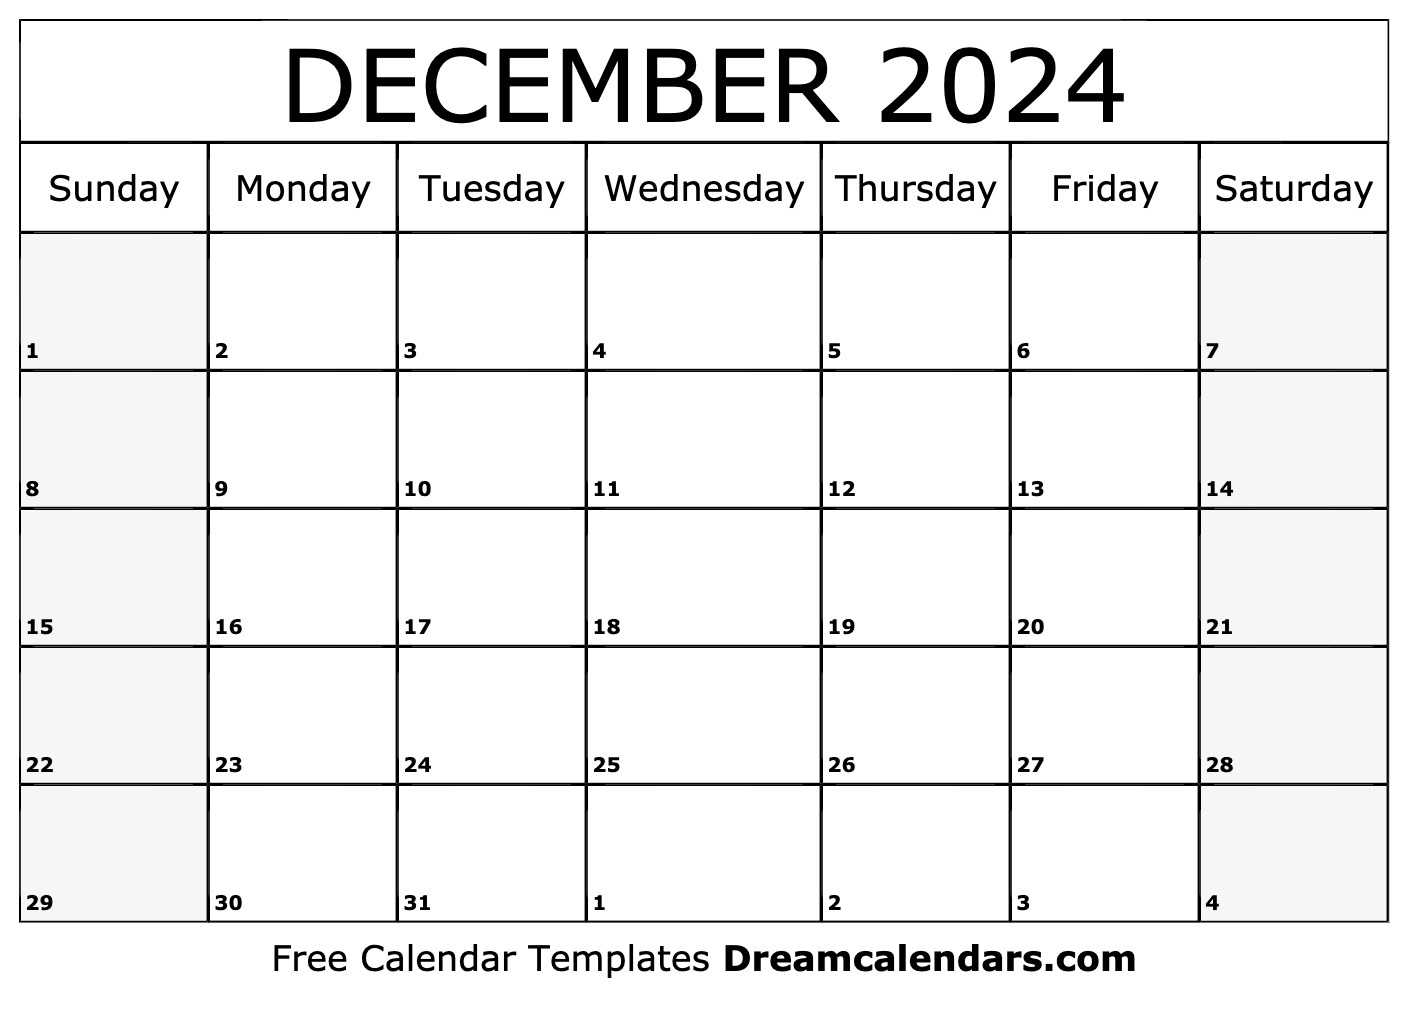 December 2024 Calendar | Free Blank Printable With Holidays inside Free Printable Blank December 2024 Calendar